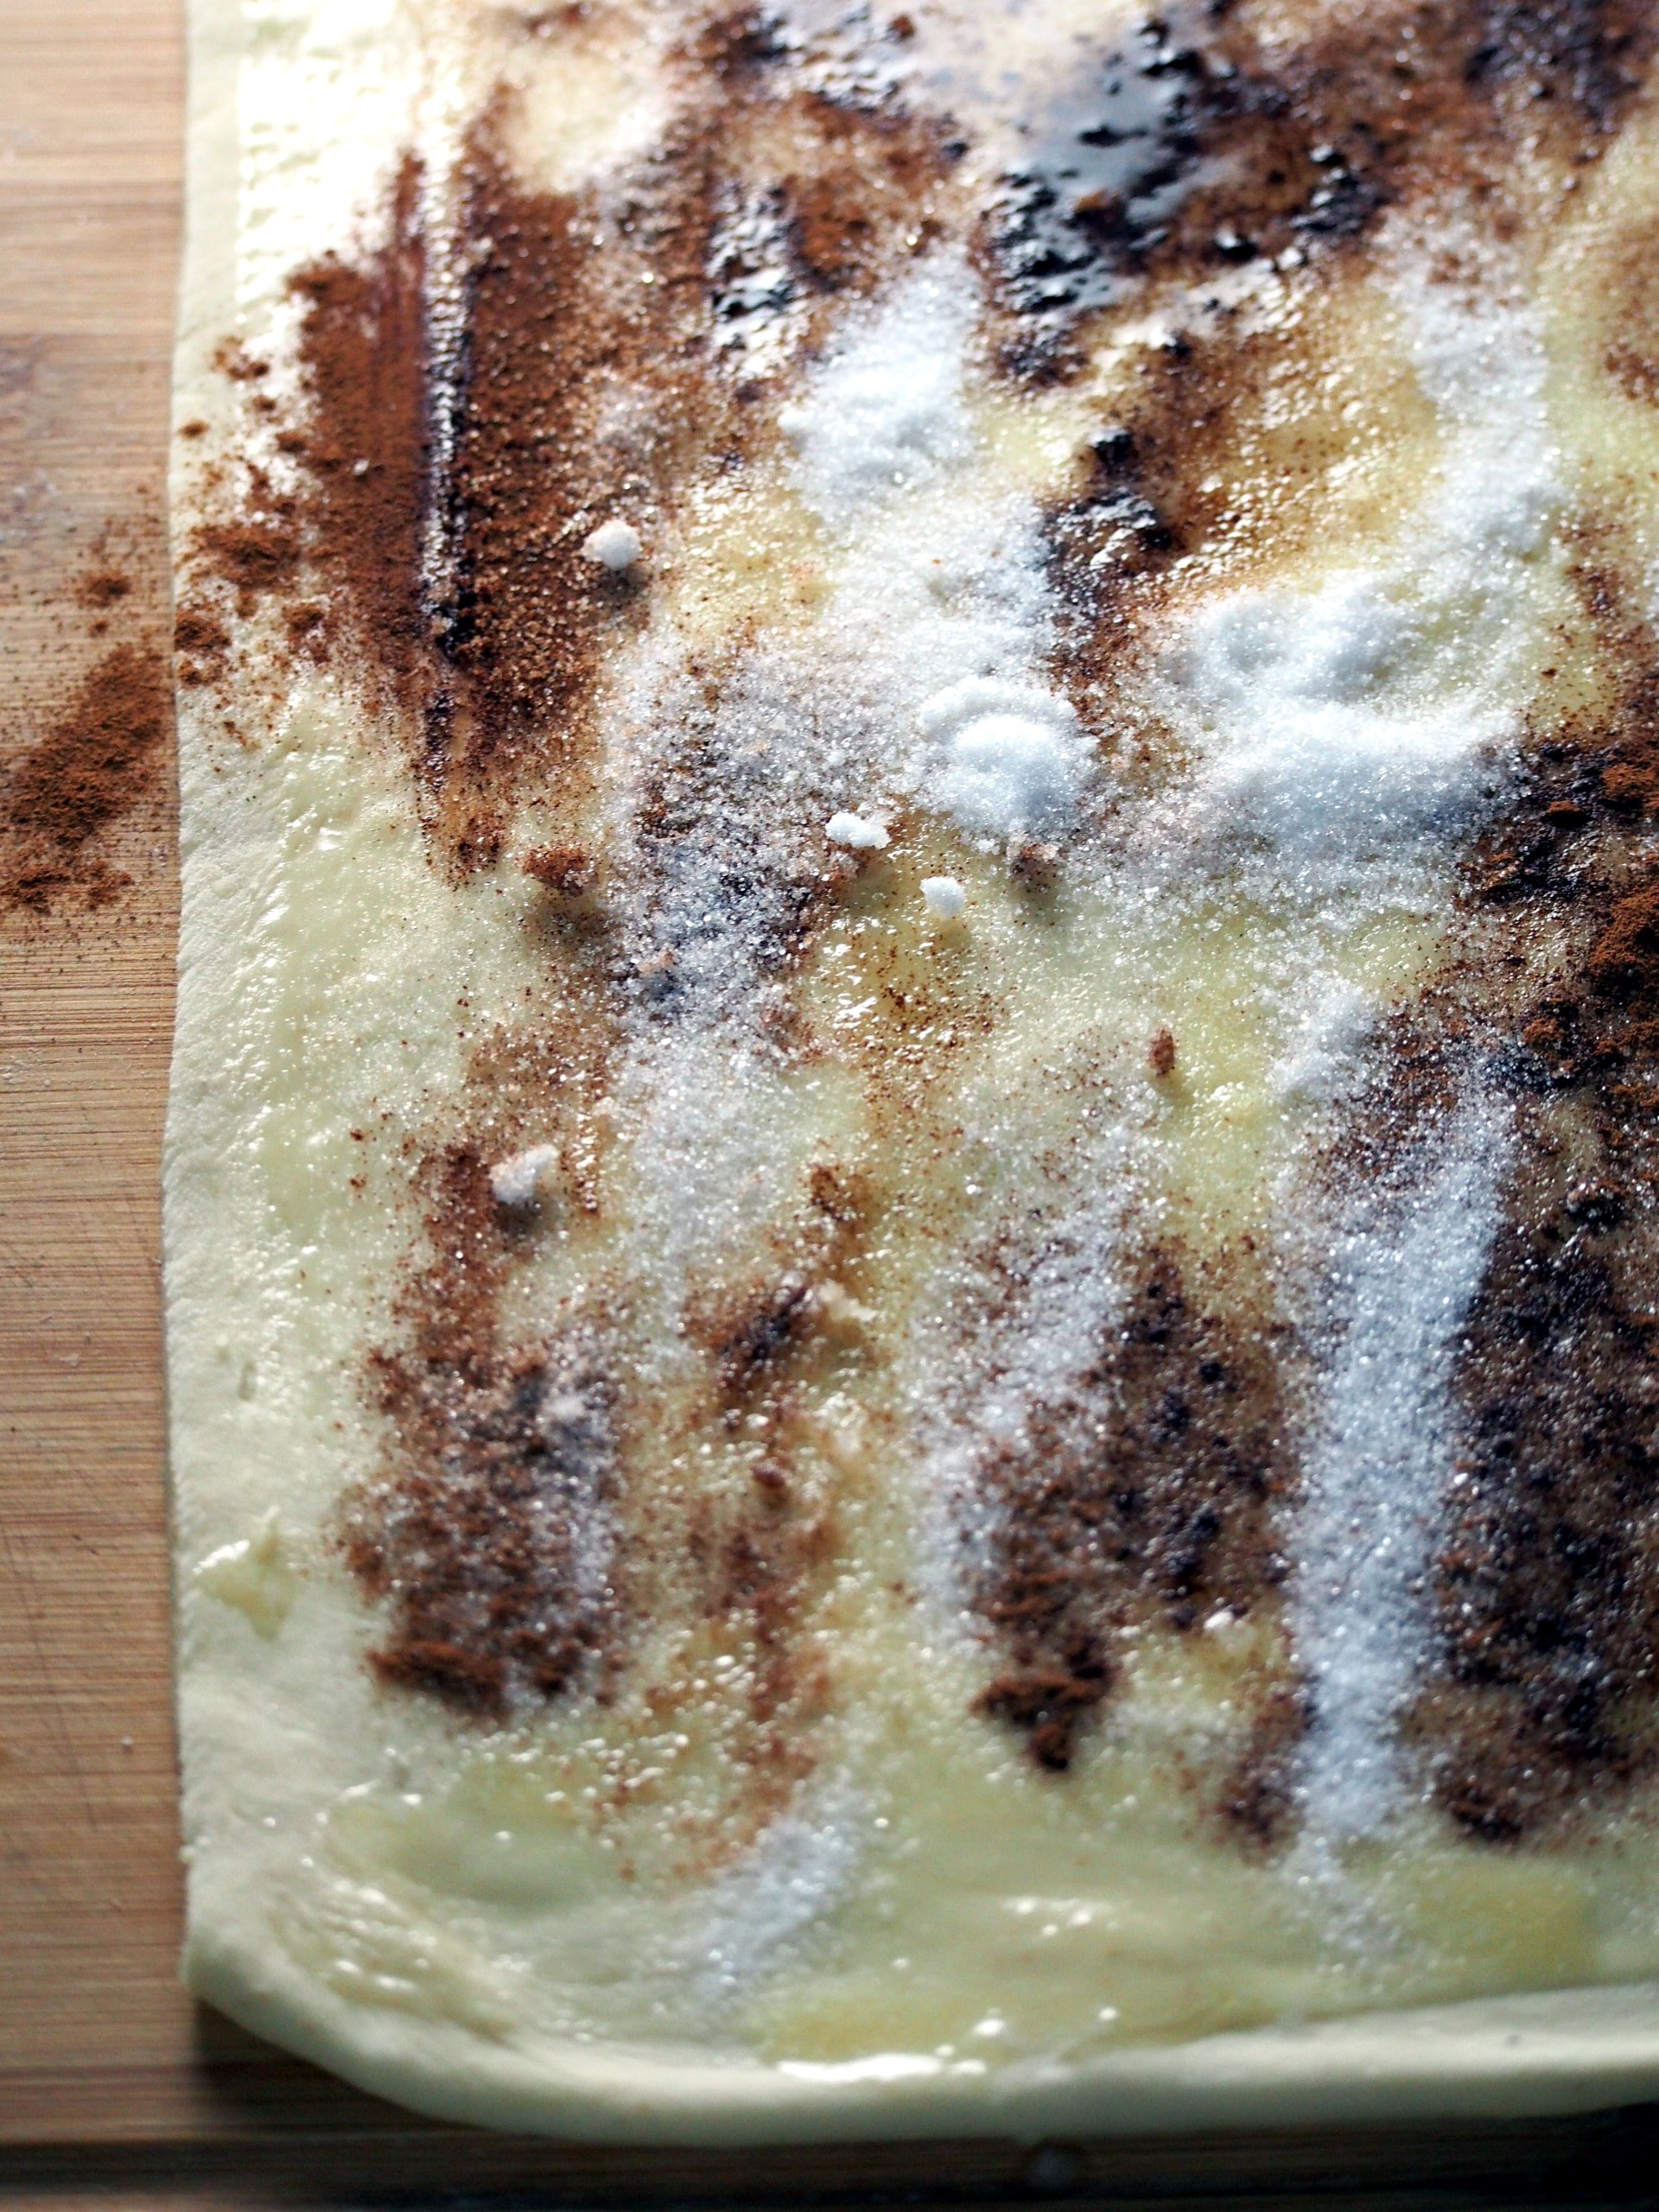 Cinnamon, butter and sugar spread on the dough.